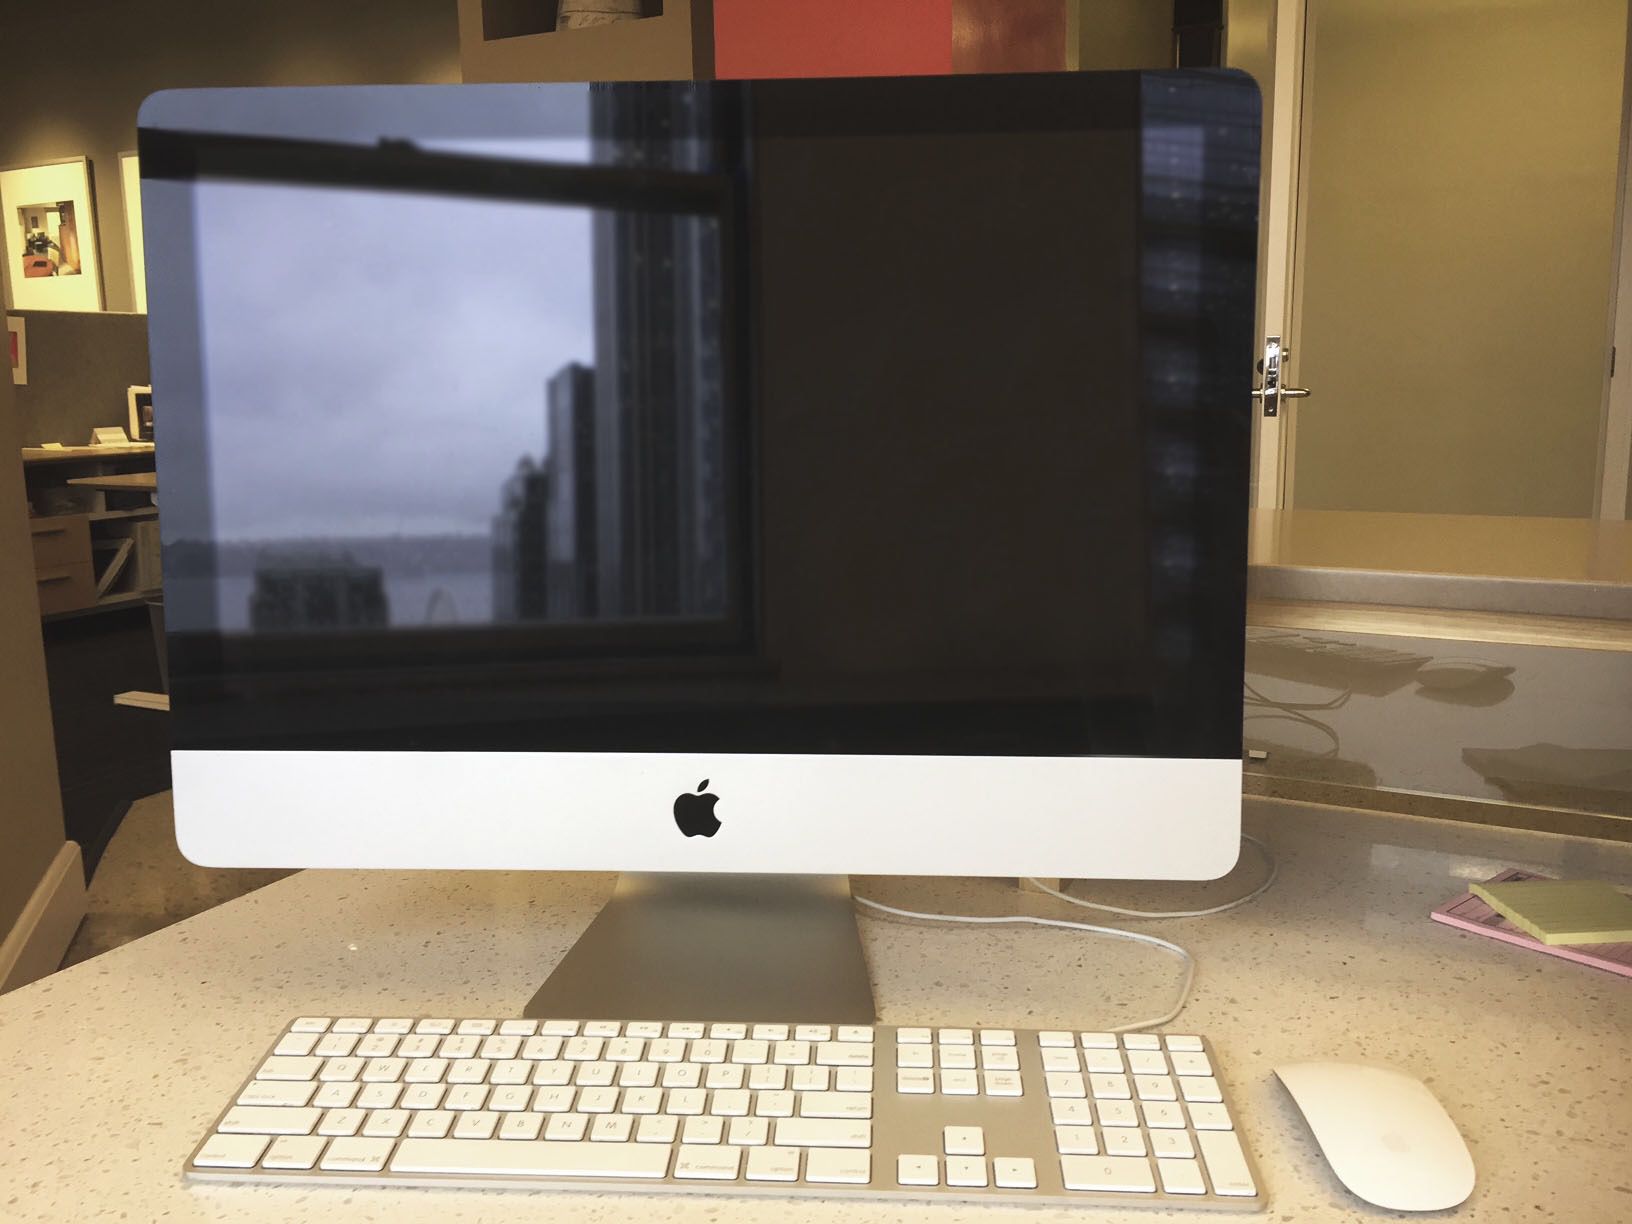 iMac 27” 3.2ghz intel core i5 (iMac 13,2) **REDUCED PRICE